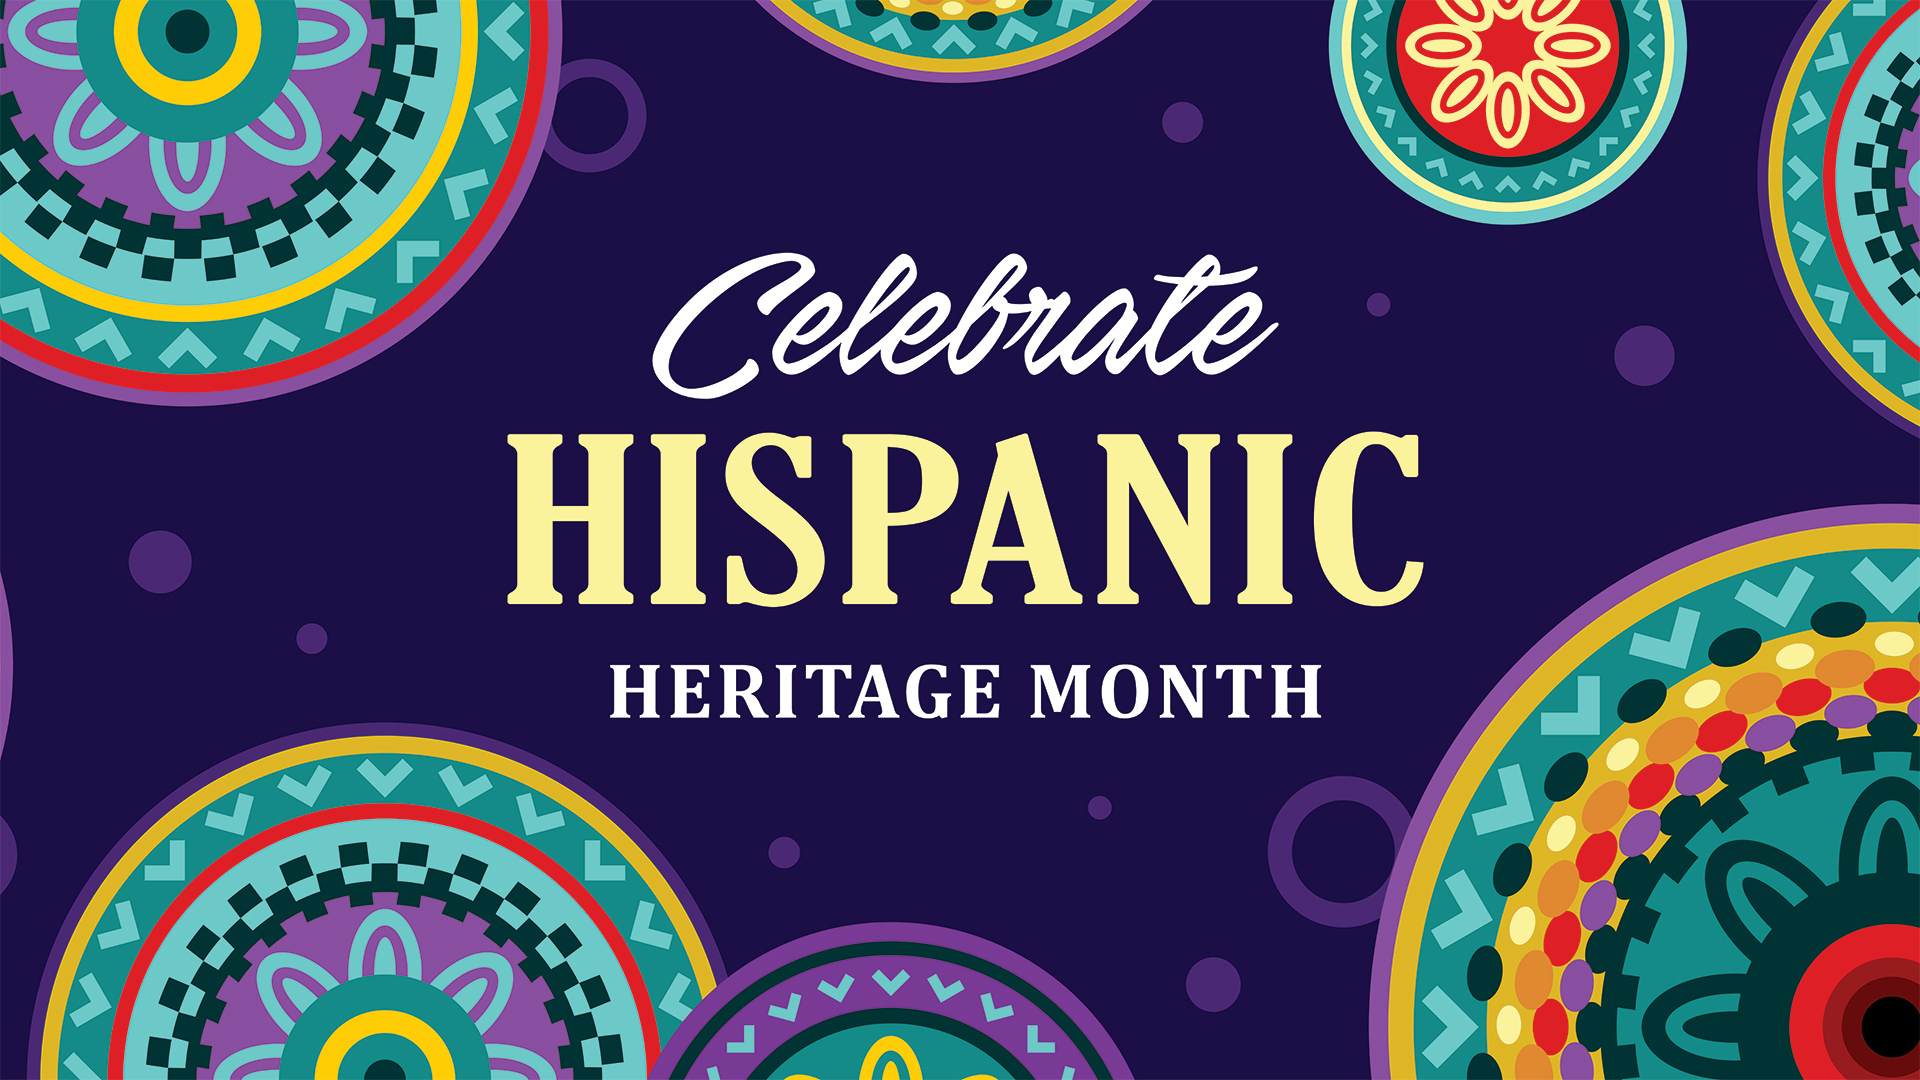 Celebrating National Hispanic Heritage Month through Theatre